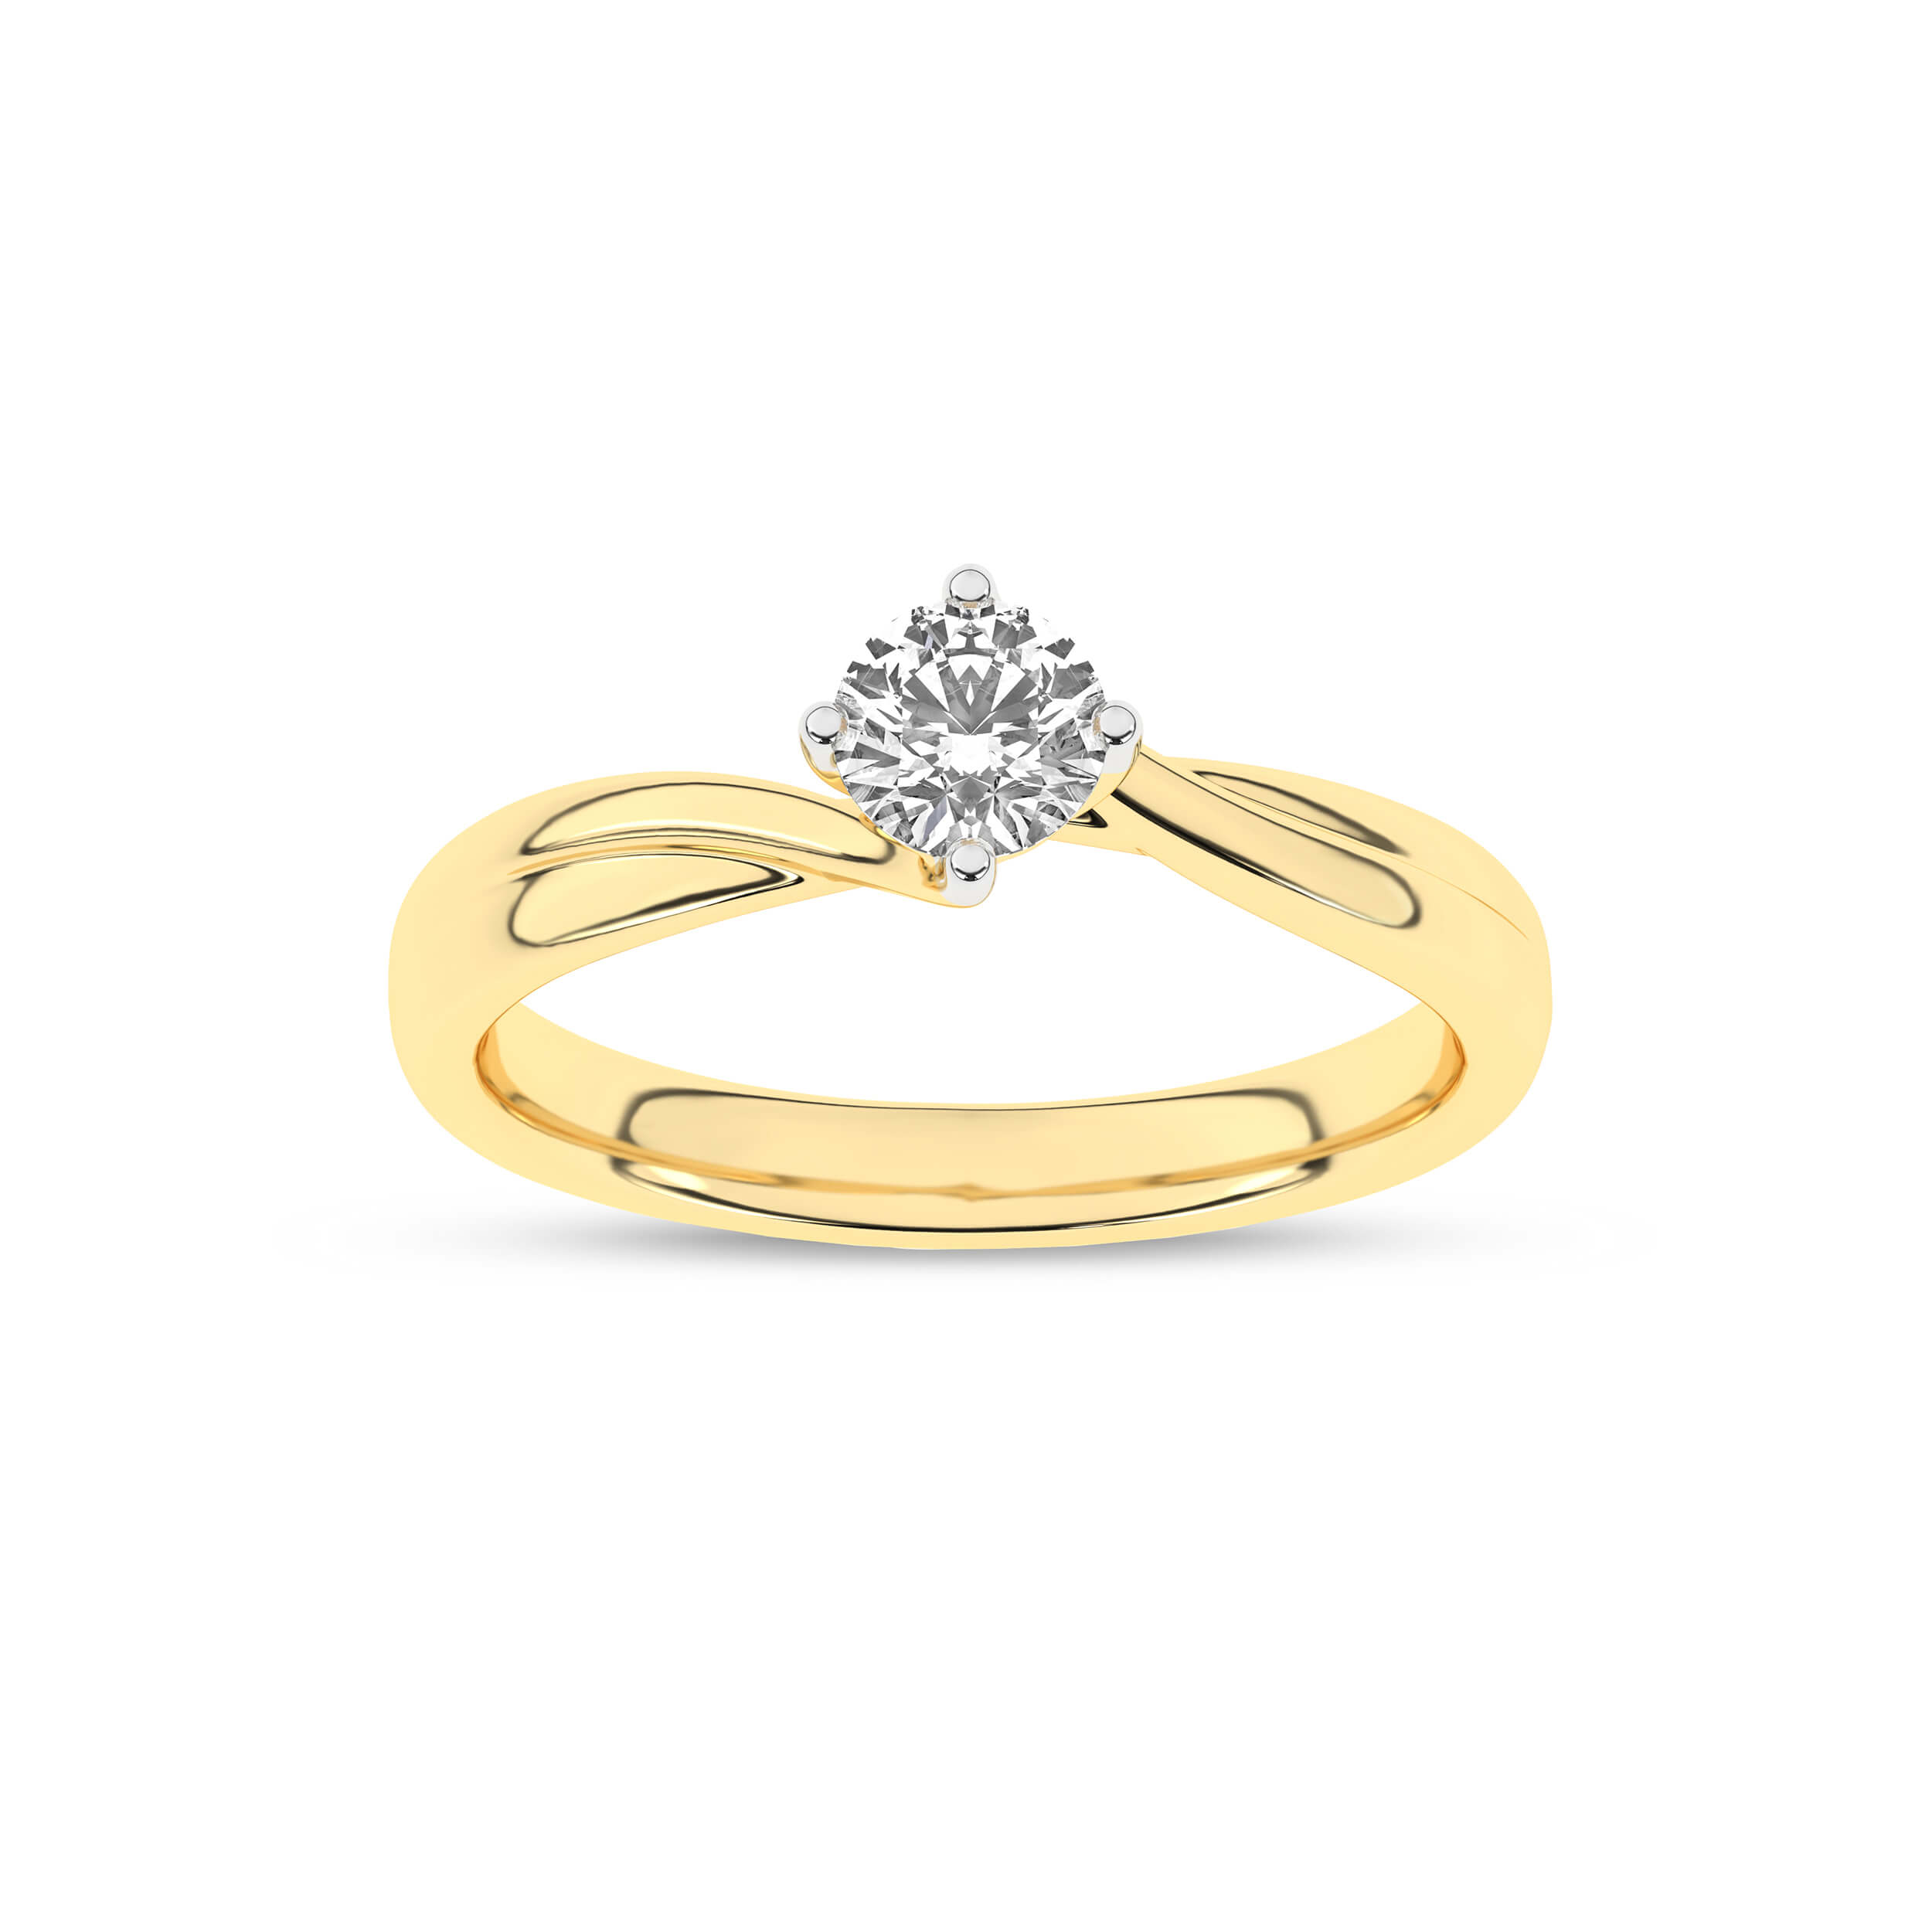 Inel de logodna din Aur Galben 14K cu Diamant 0.33Ct, articol MSD0391EG, previzualizare foto 3